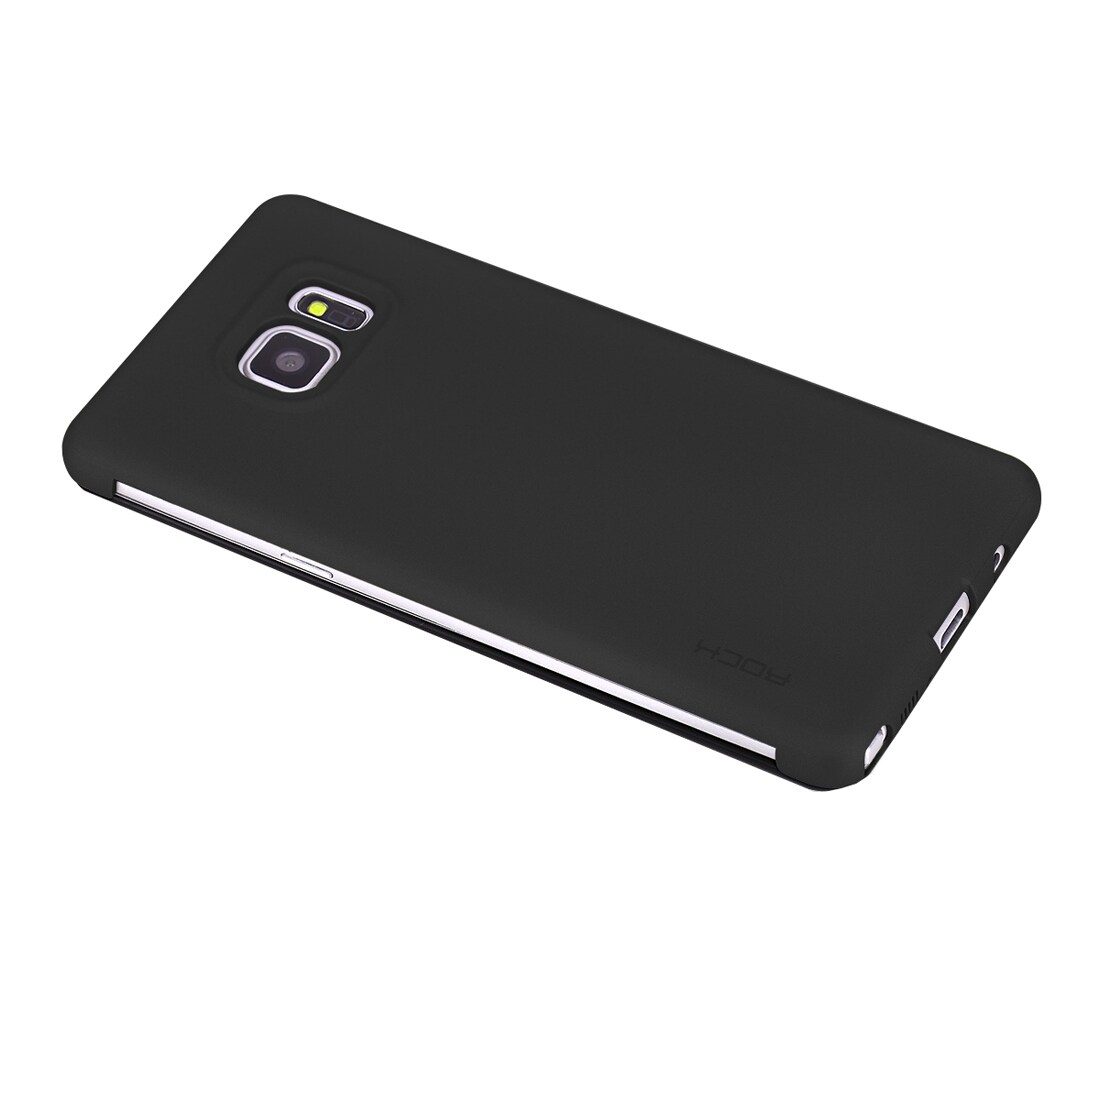 Rock Flip Case Etui Samsung Galaxy Note 7 - Dr.V Business Style